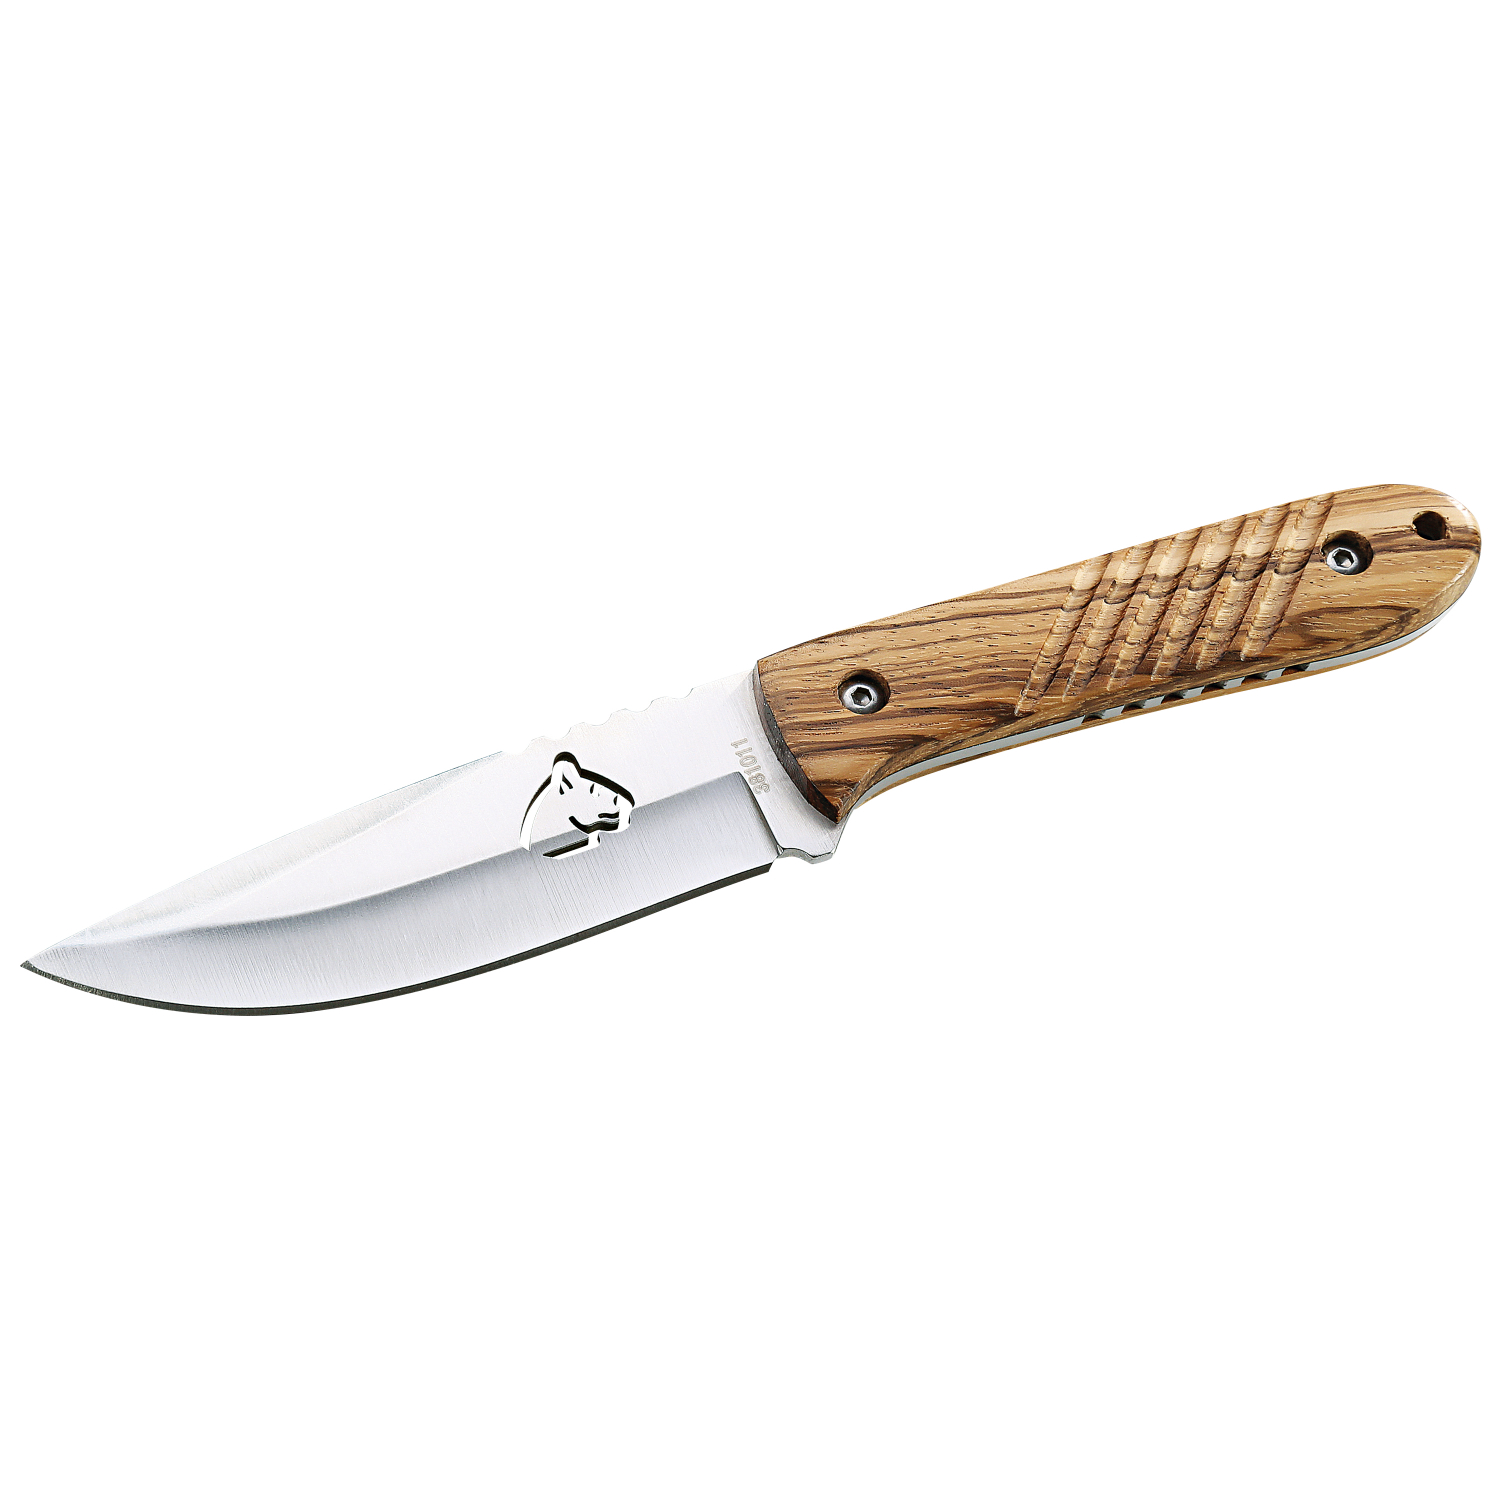 Puma Tec Belt Knife at low prices